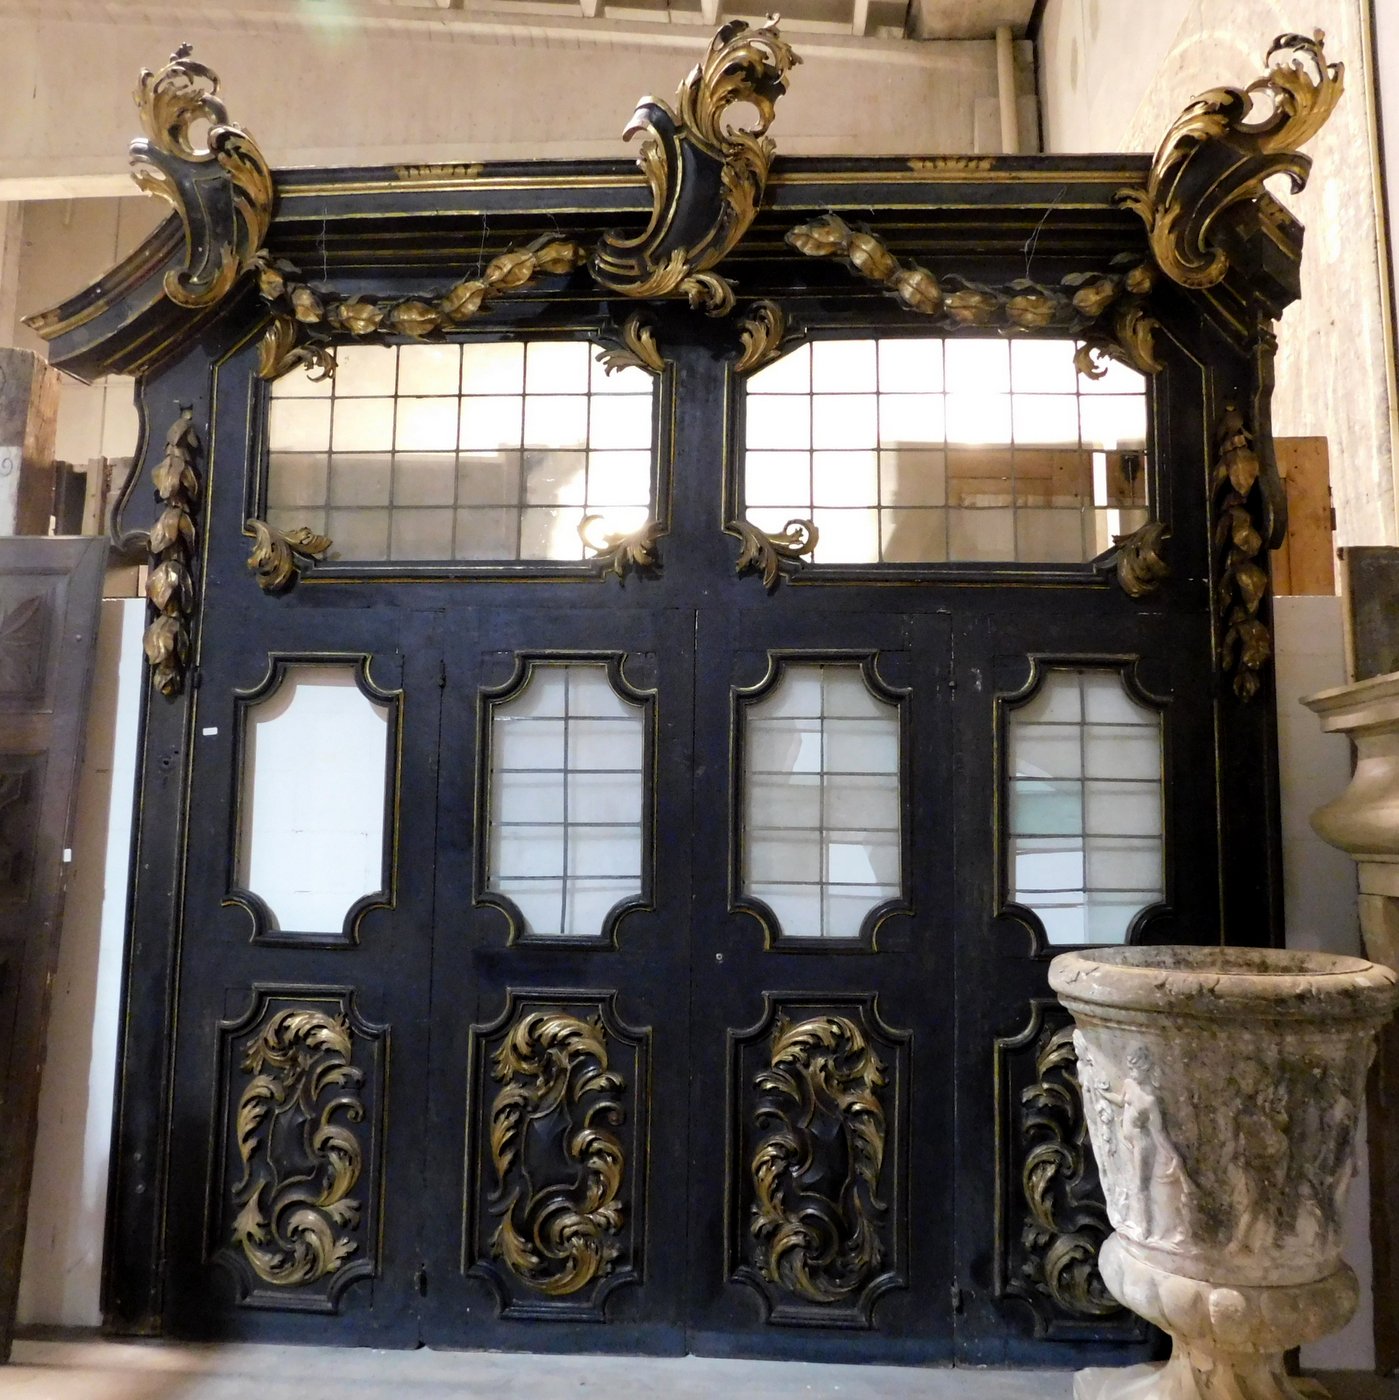 ptn231 large sixteenth-century glass portal,h cm420 x 435 width